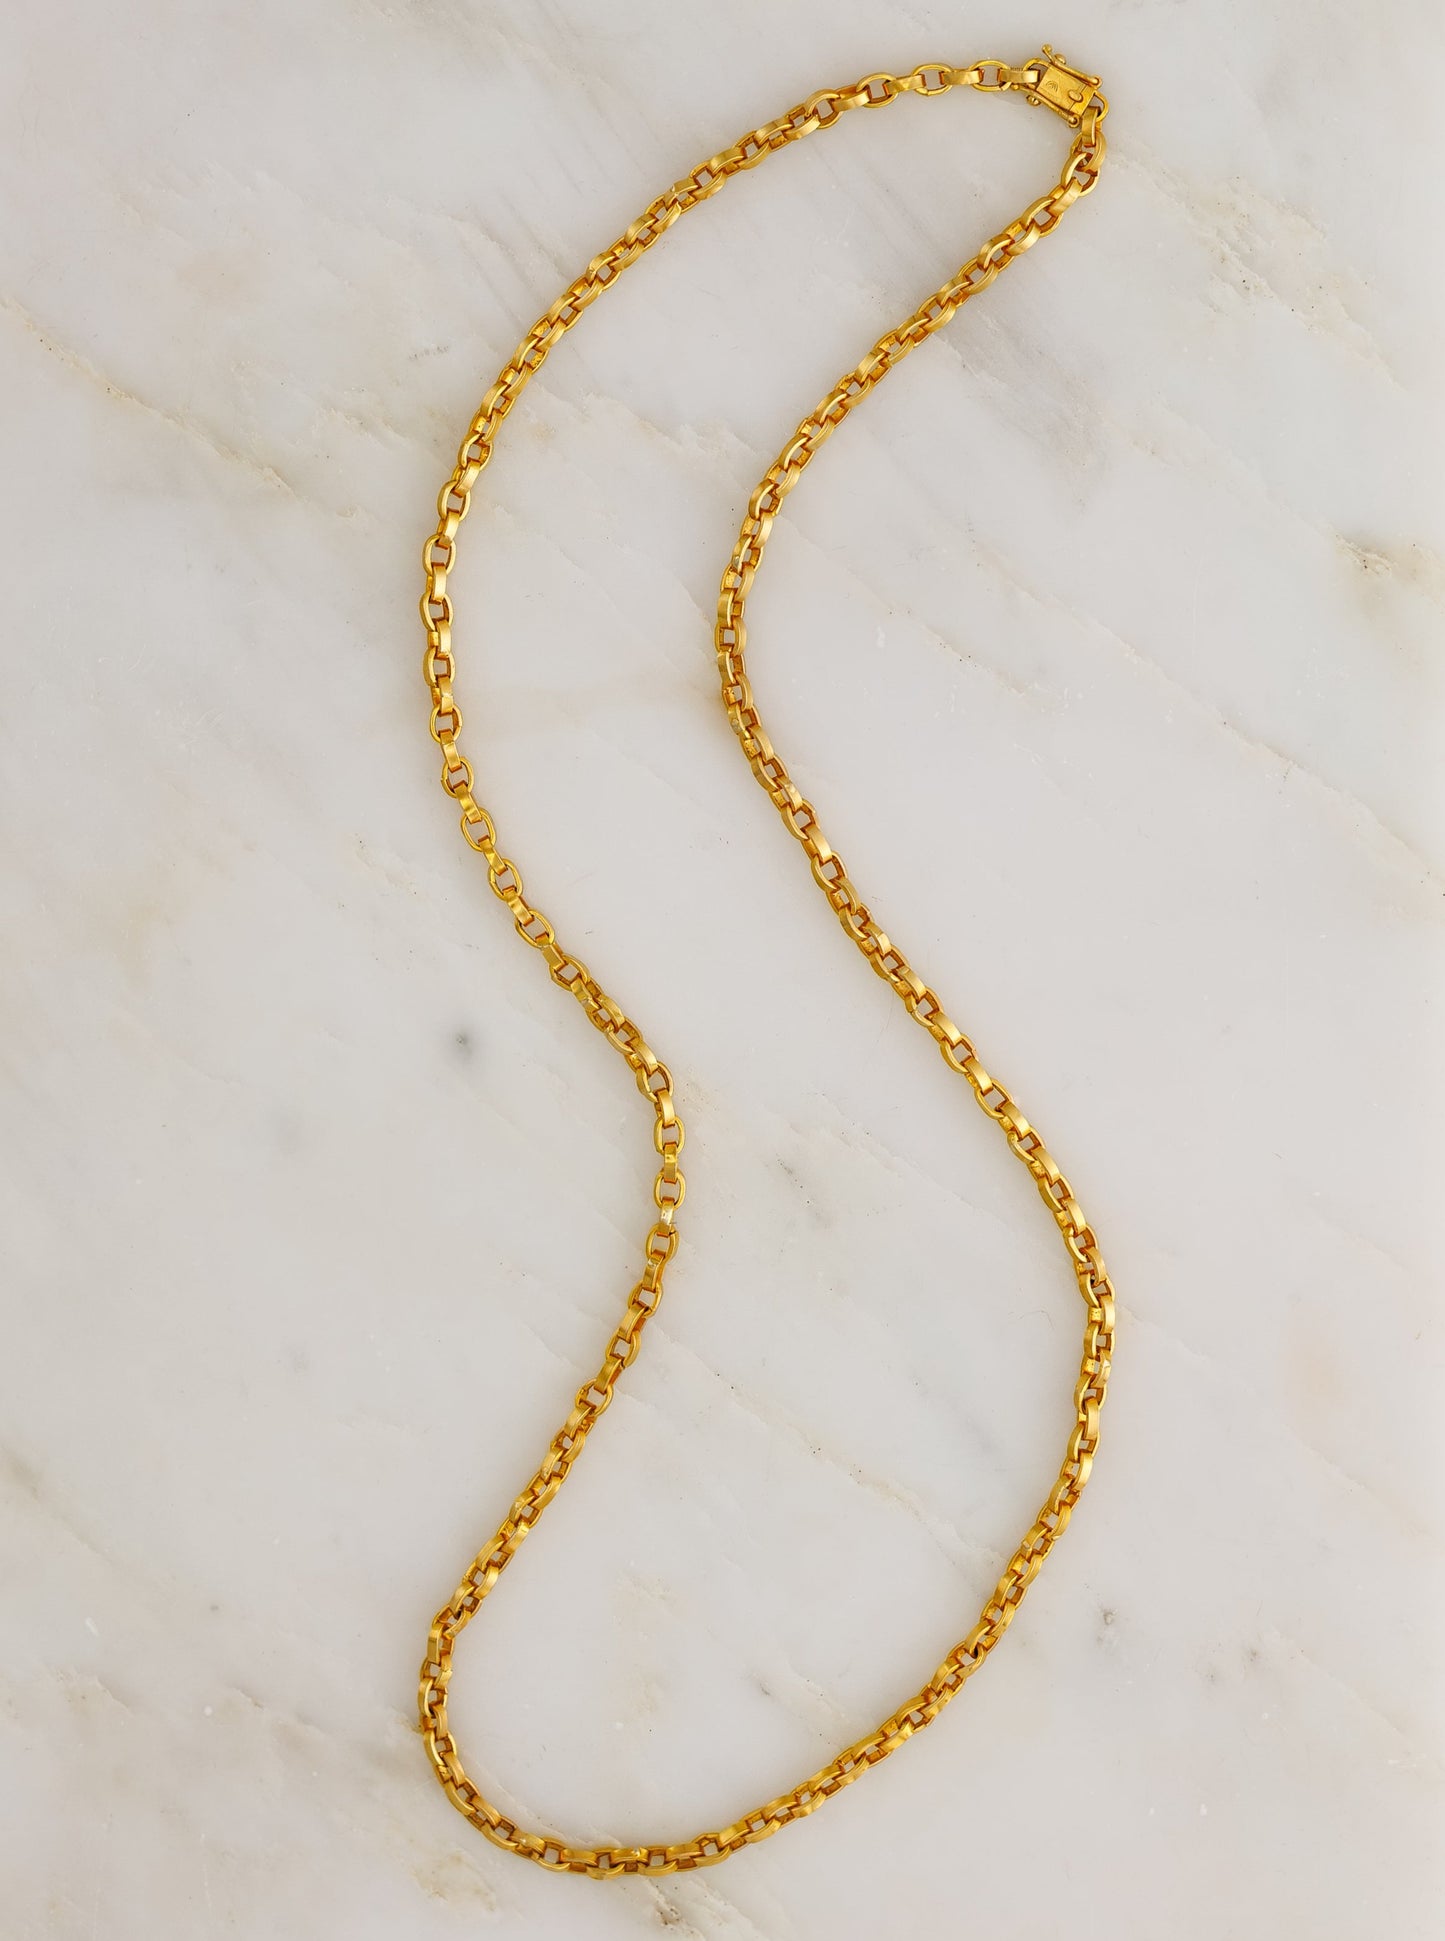 Signature Chain Necklace